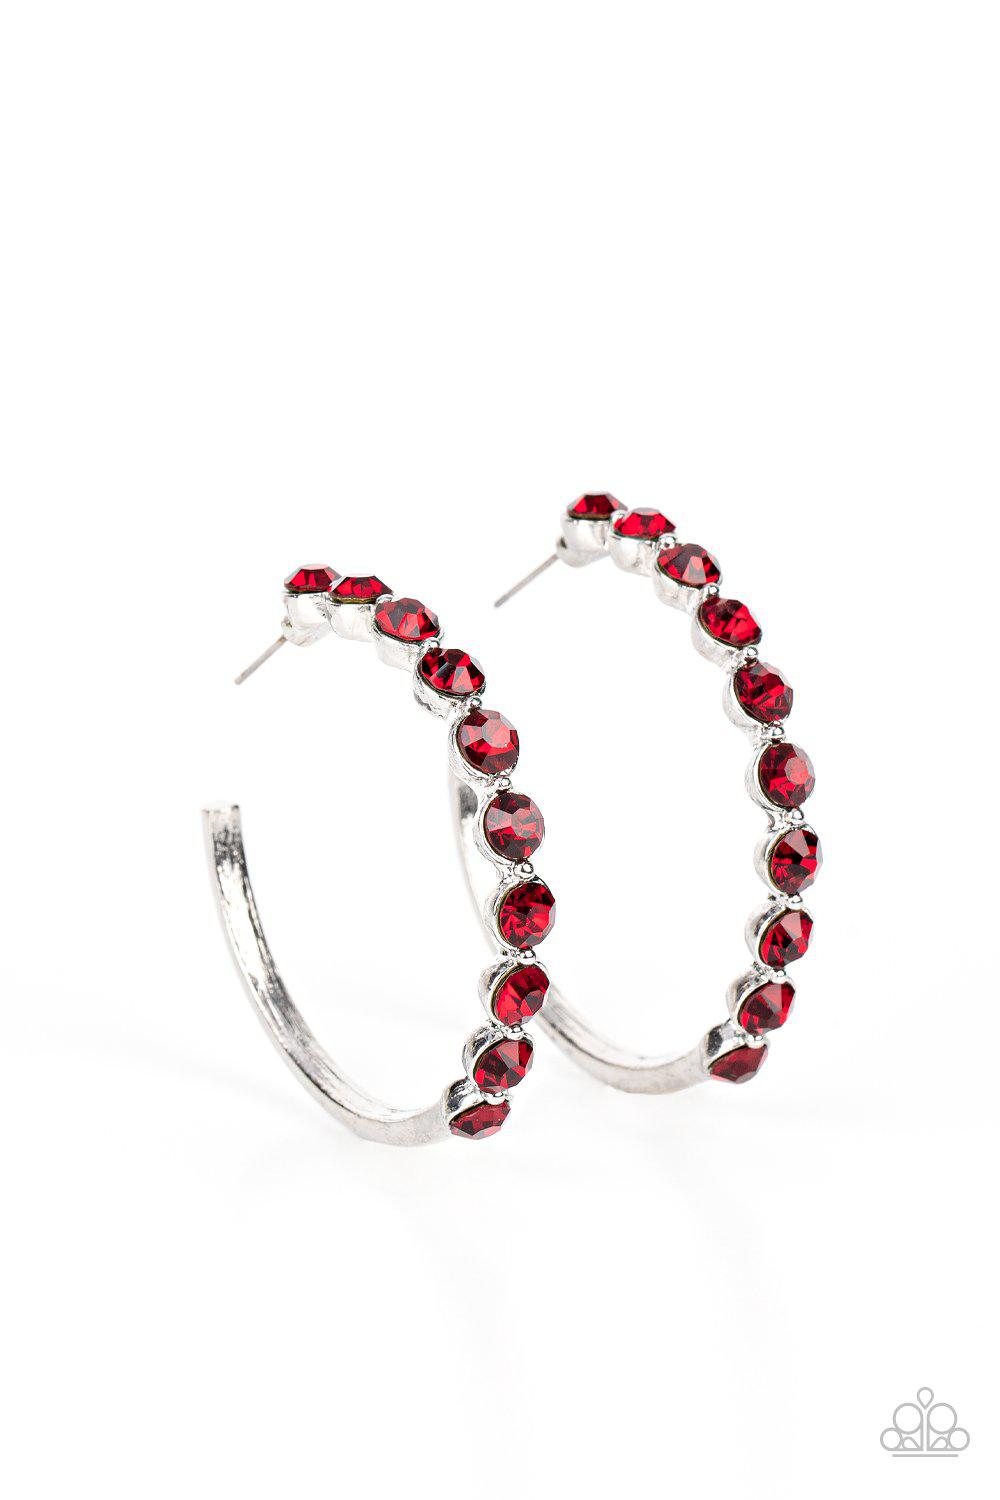 Photo Finish Red Rhinestone Hoop Earrings - Paparazzi Accessories- lightbox - CarasShop.com - $5 Jewelry by Cara Jewels